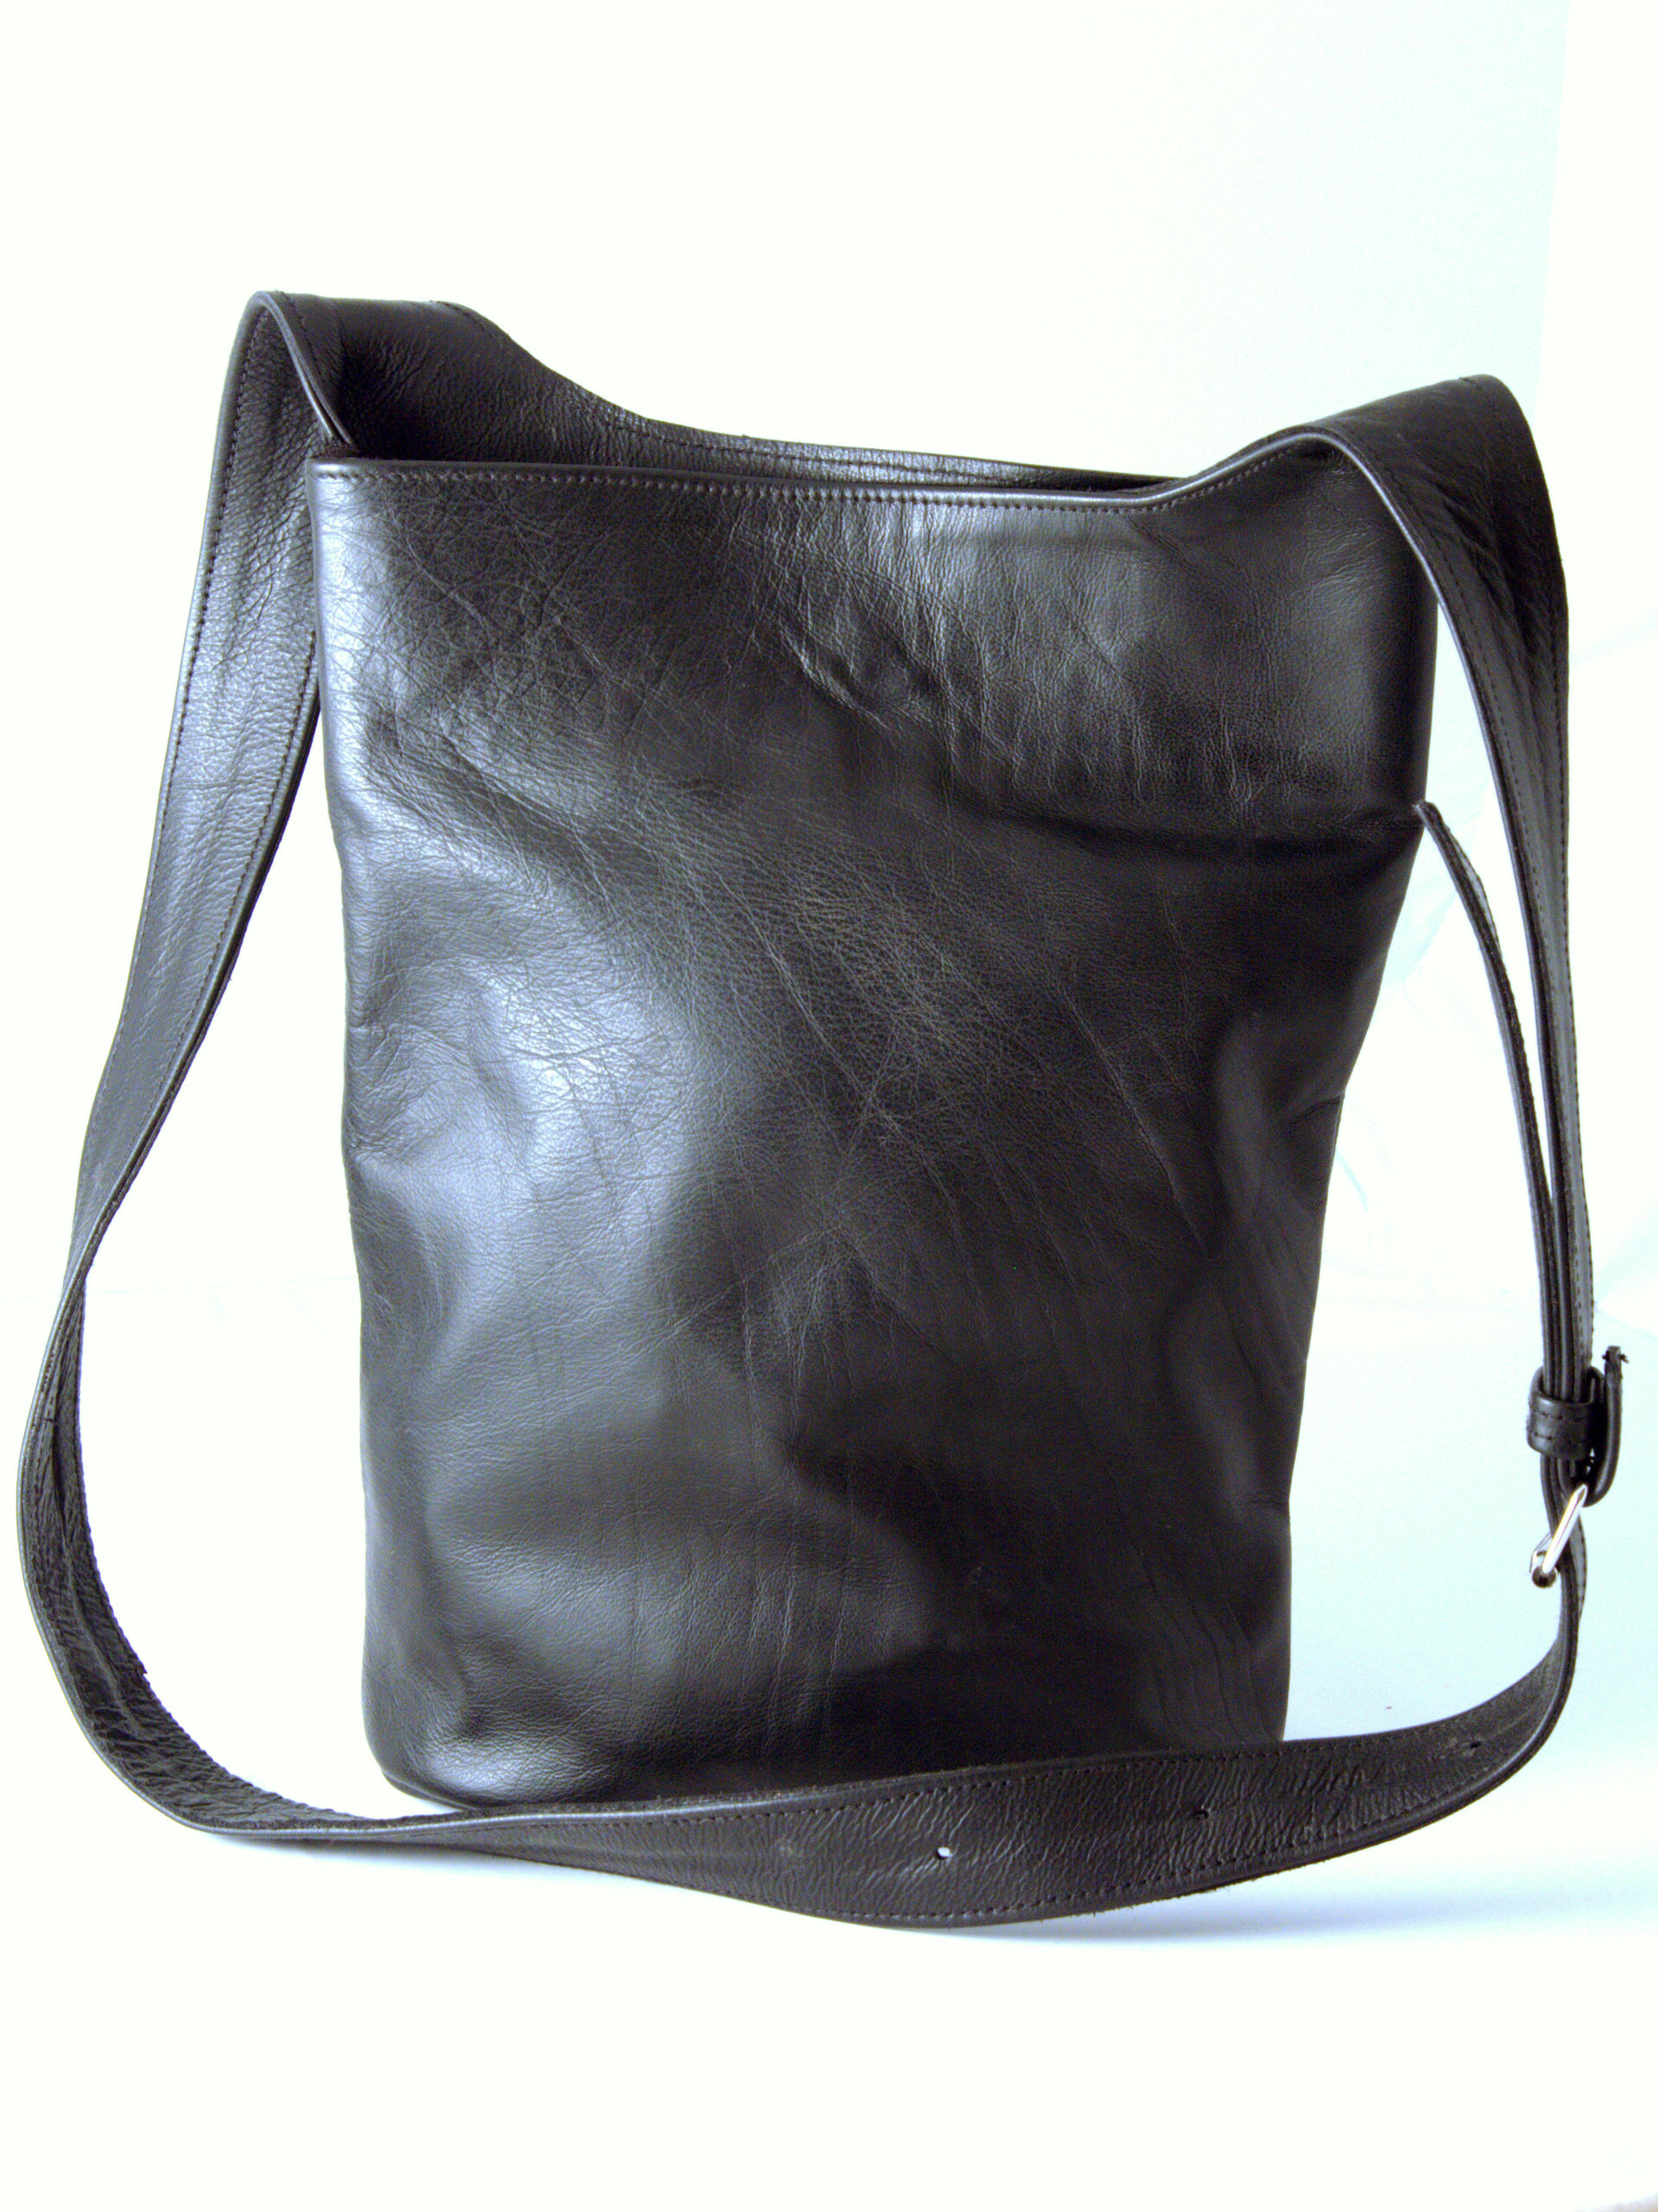 Gundara - Summer Time - genuine leather - fair trade bag from Afghanistan - black